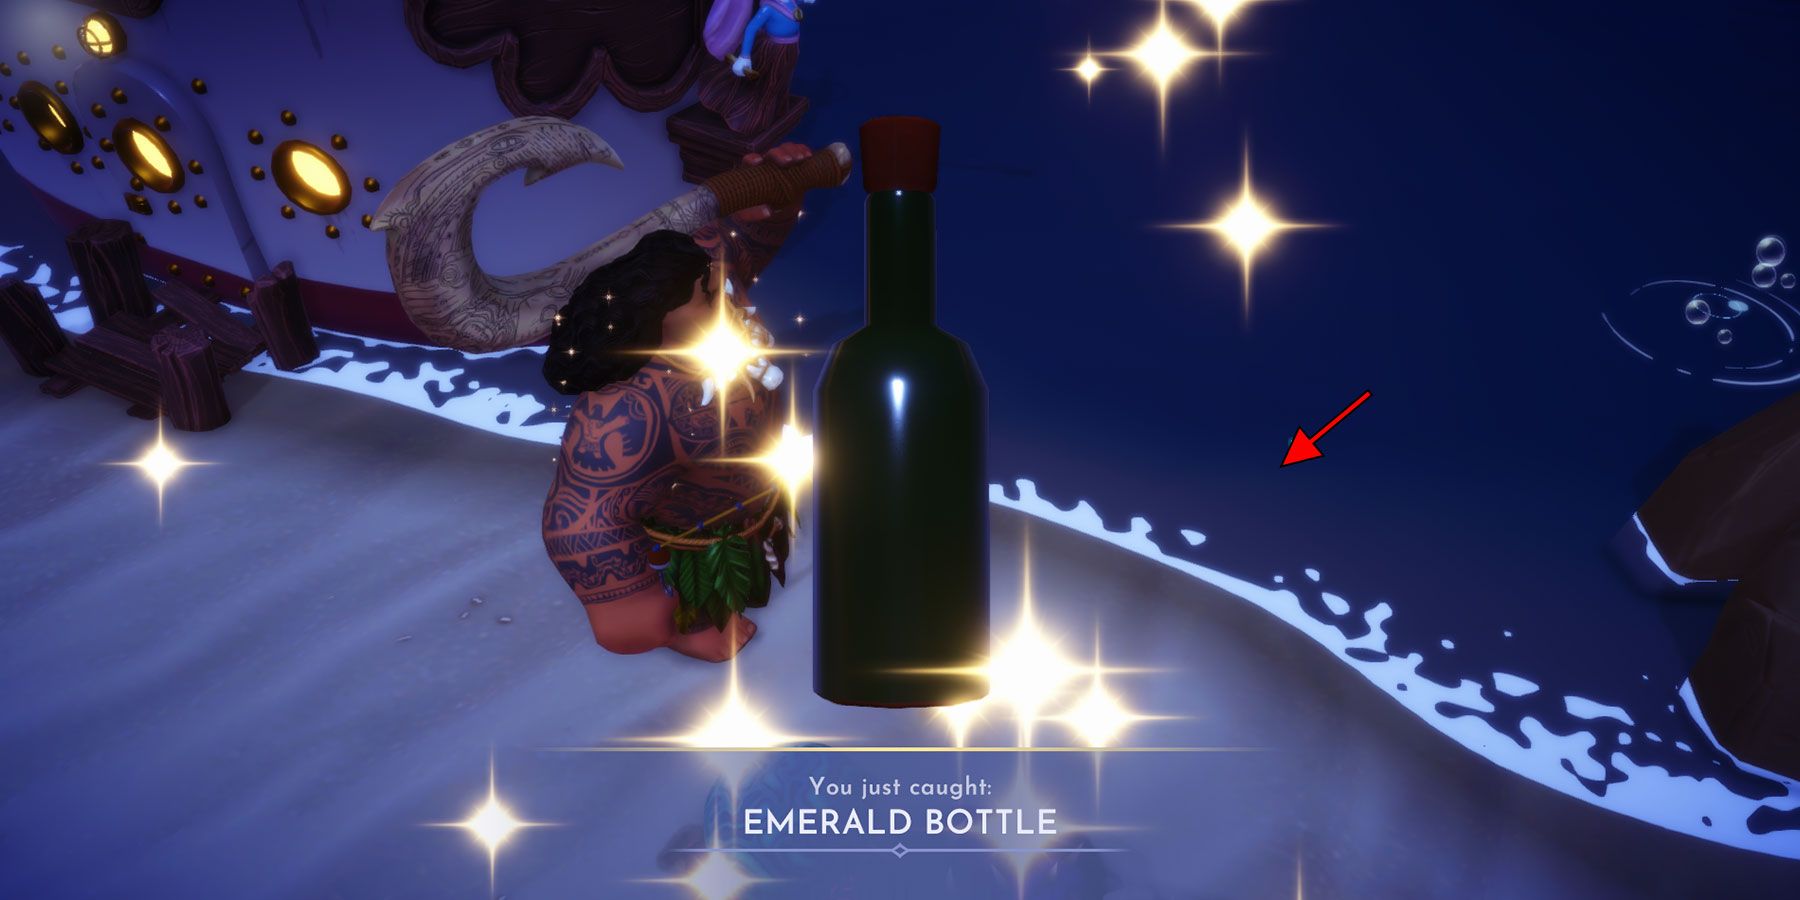 Emerald Bottle location for secret Green Potato quest in Disney Dreamlight Valley.